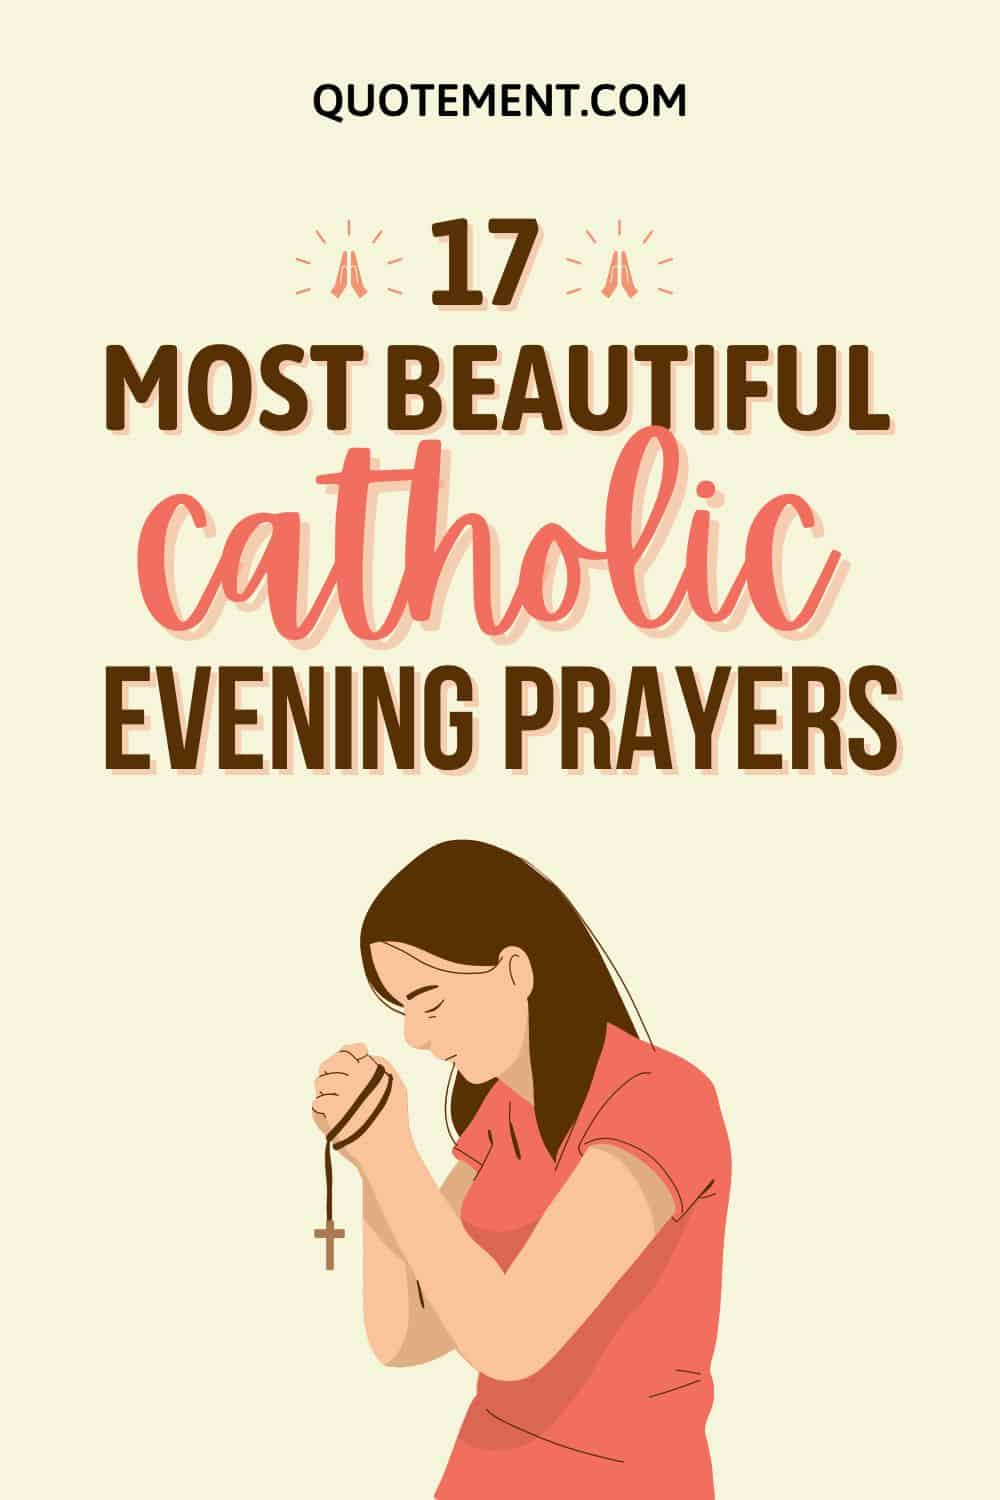 17 Catholic Evening Prayers To Give You A Peaceful Sleep